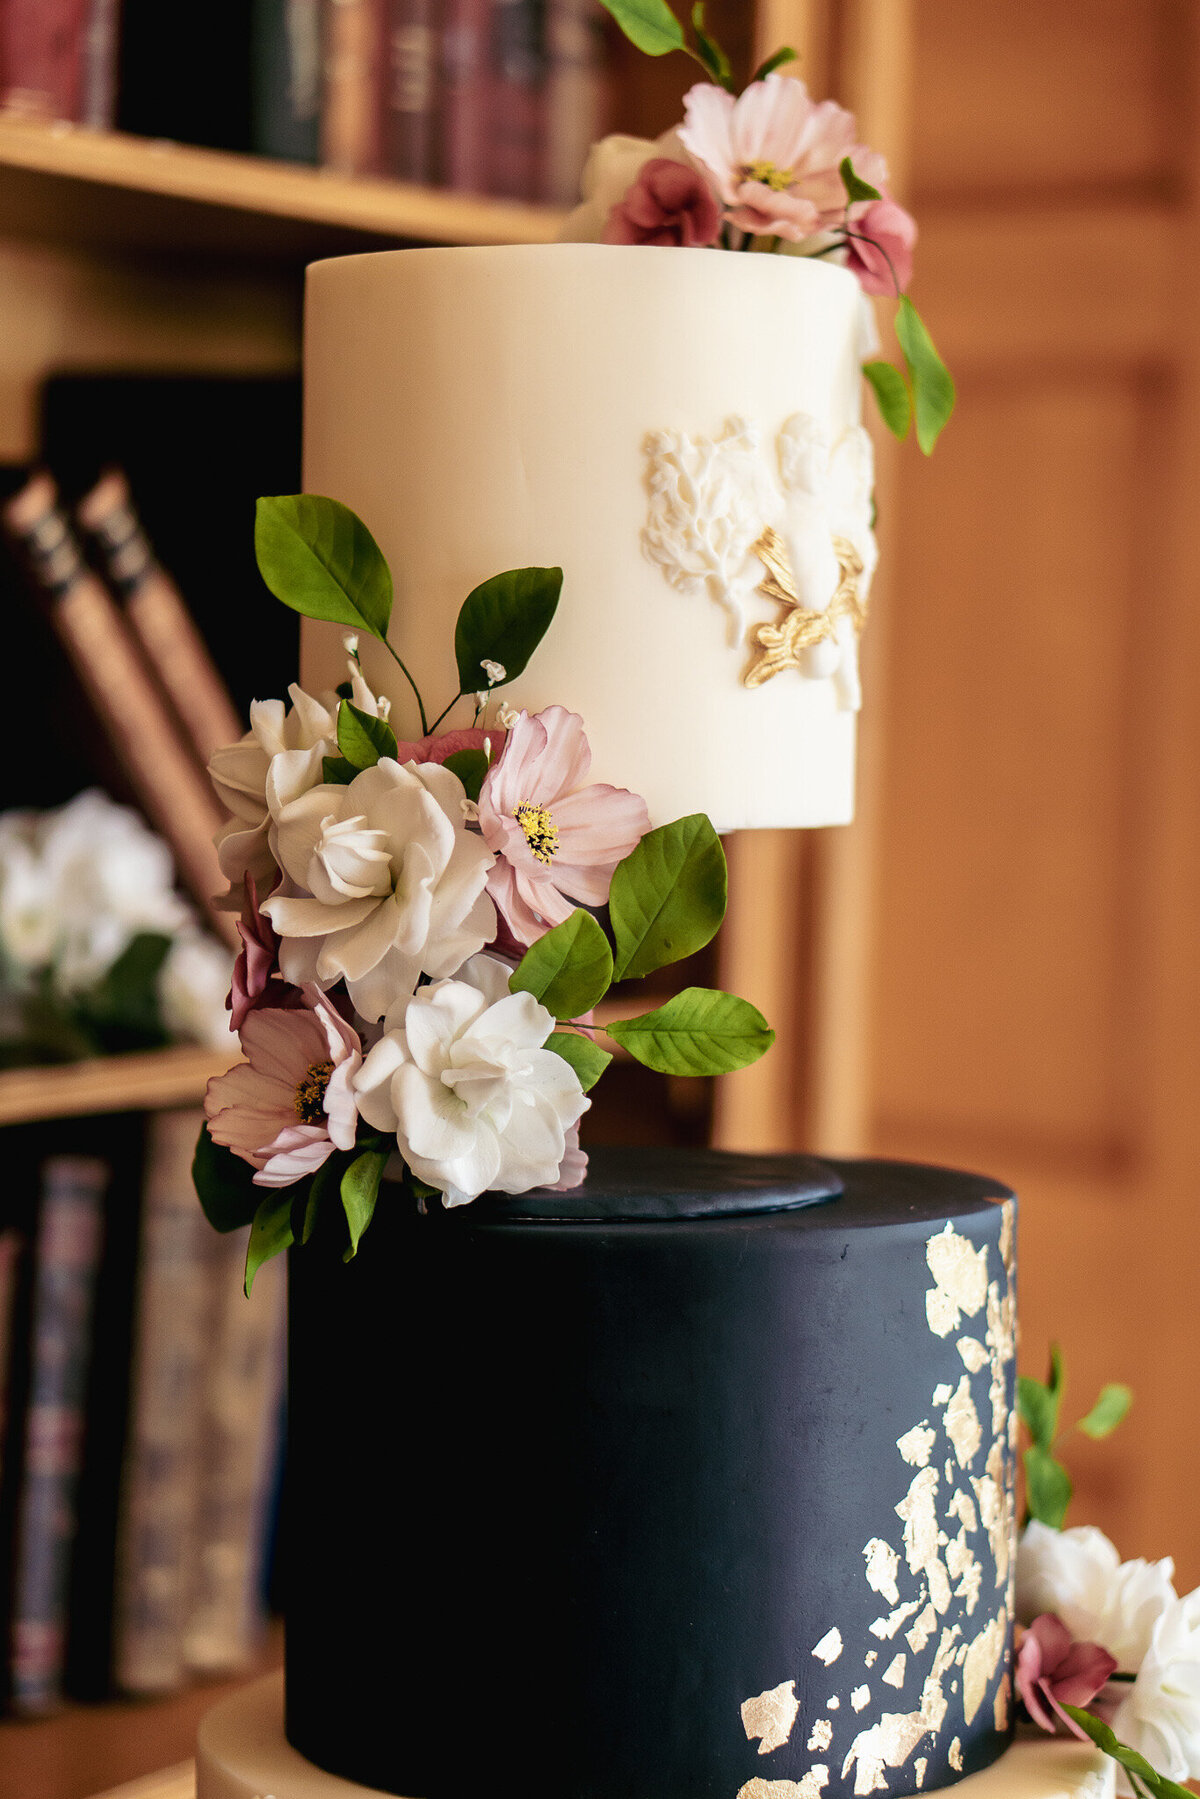 95FAD3Luxury nature inspired wedding cake designer vanilla Spice Cake Studio Northamptonshire floating tiered cake navy white gold sugar flowersD0-E002-42A6-9B06-9D1646B49DC0